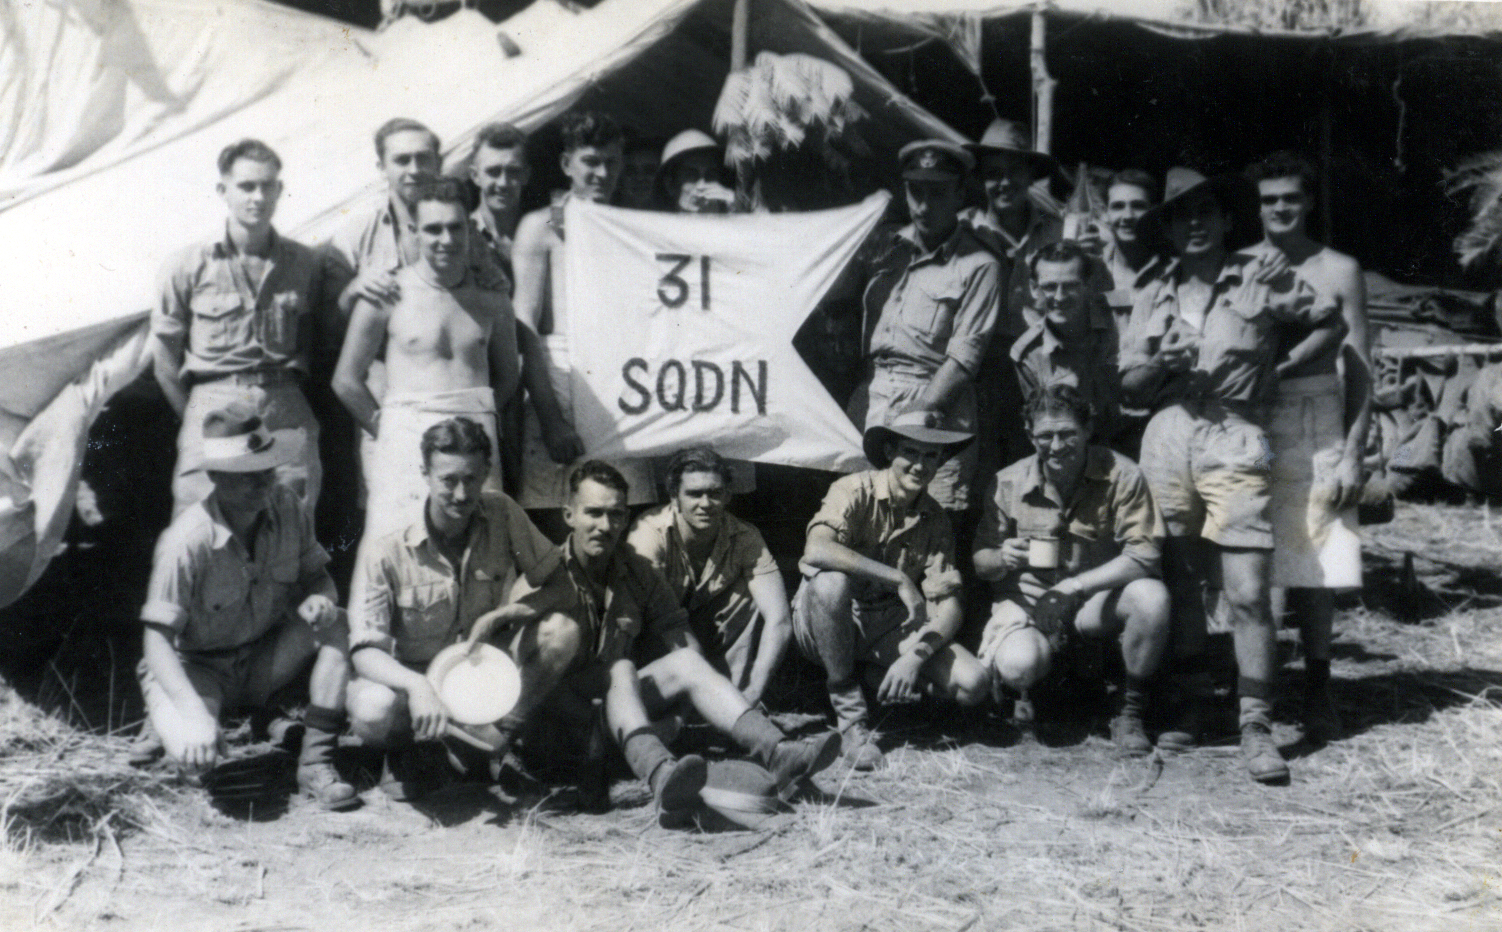 31 Squadron Race Meeting